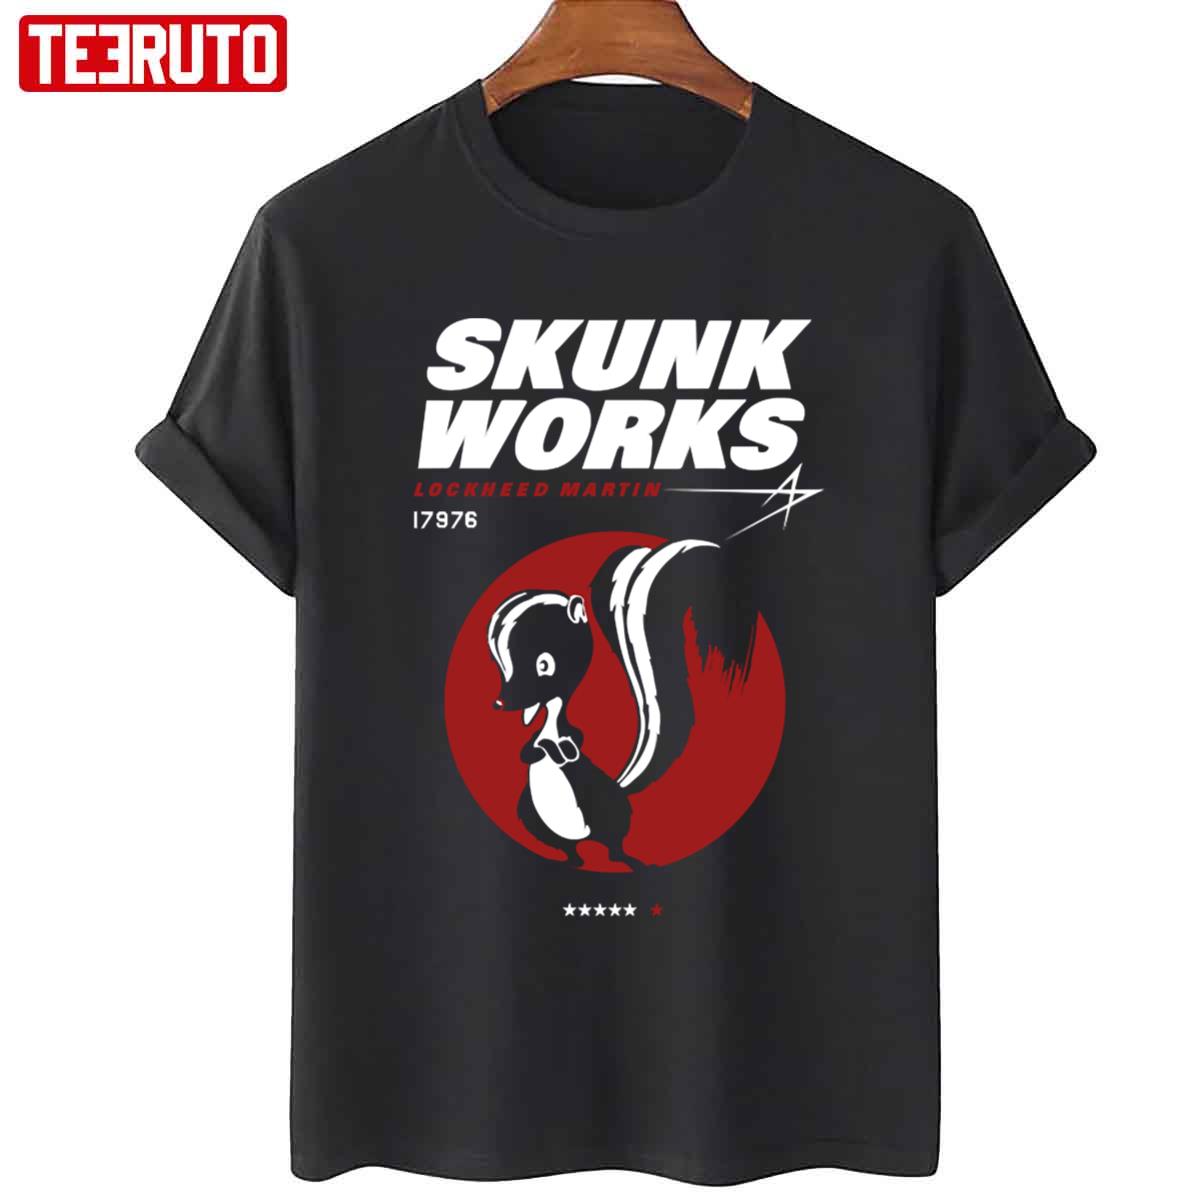 Skunk Works Lockheed Martin Unisex Sweatshirt